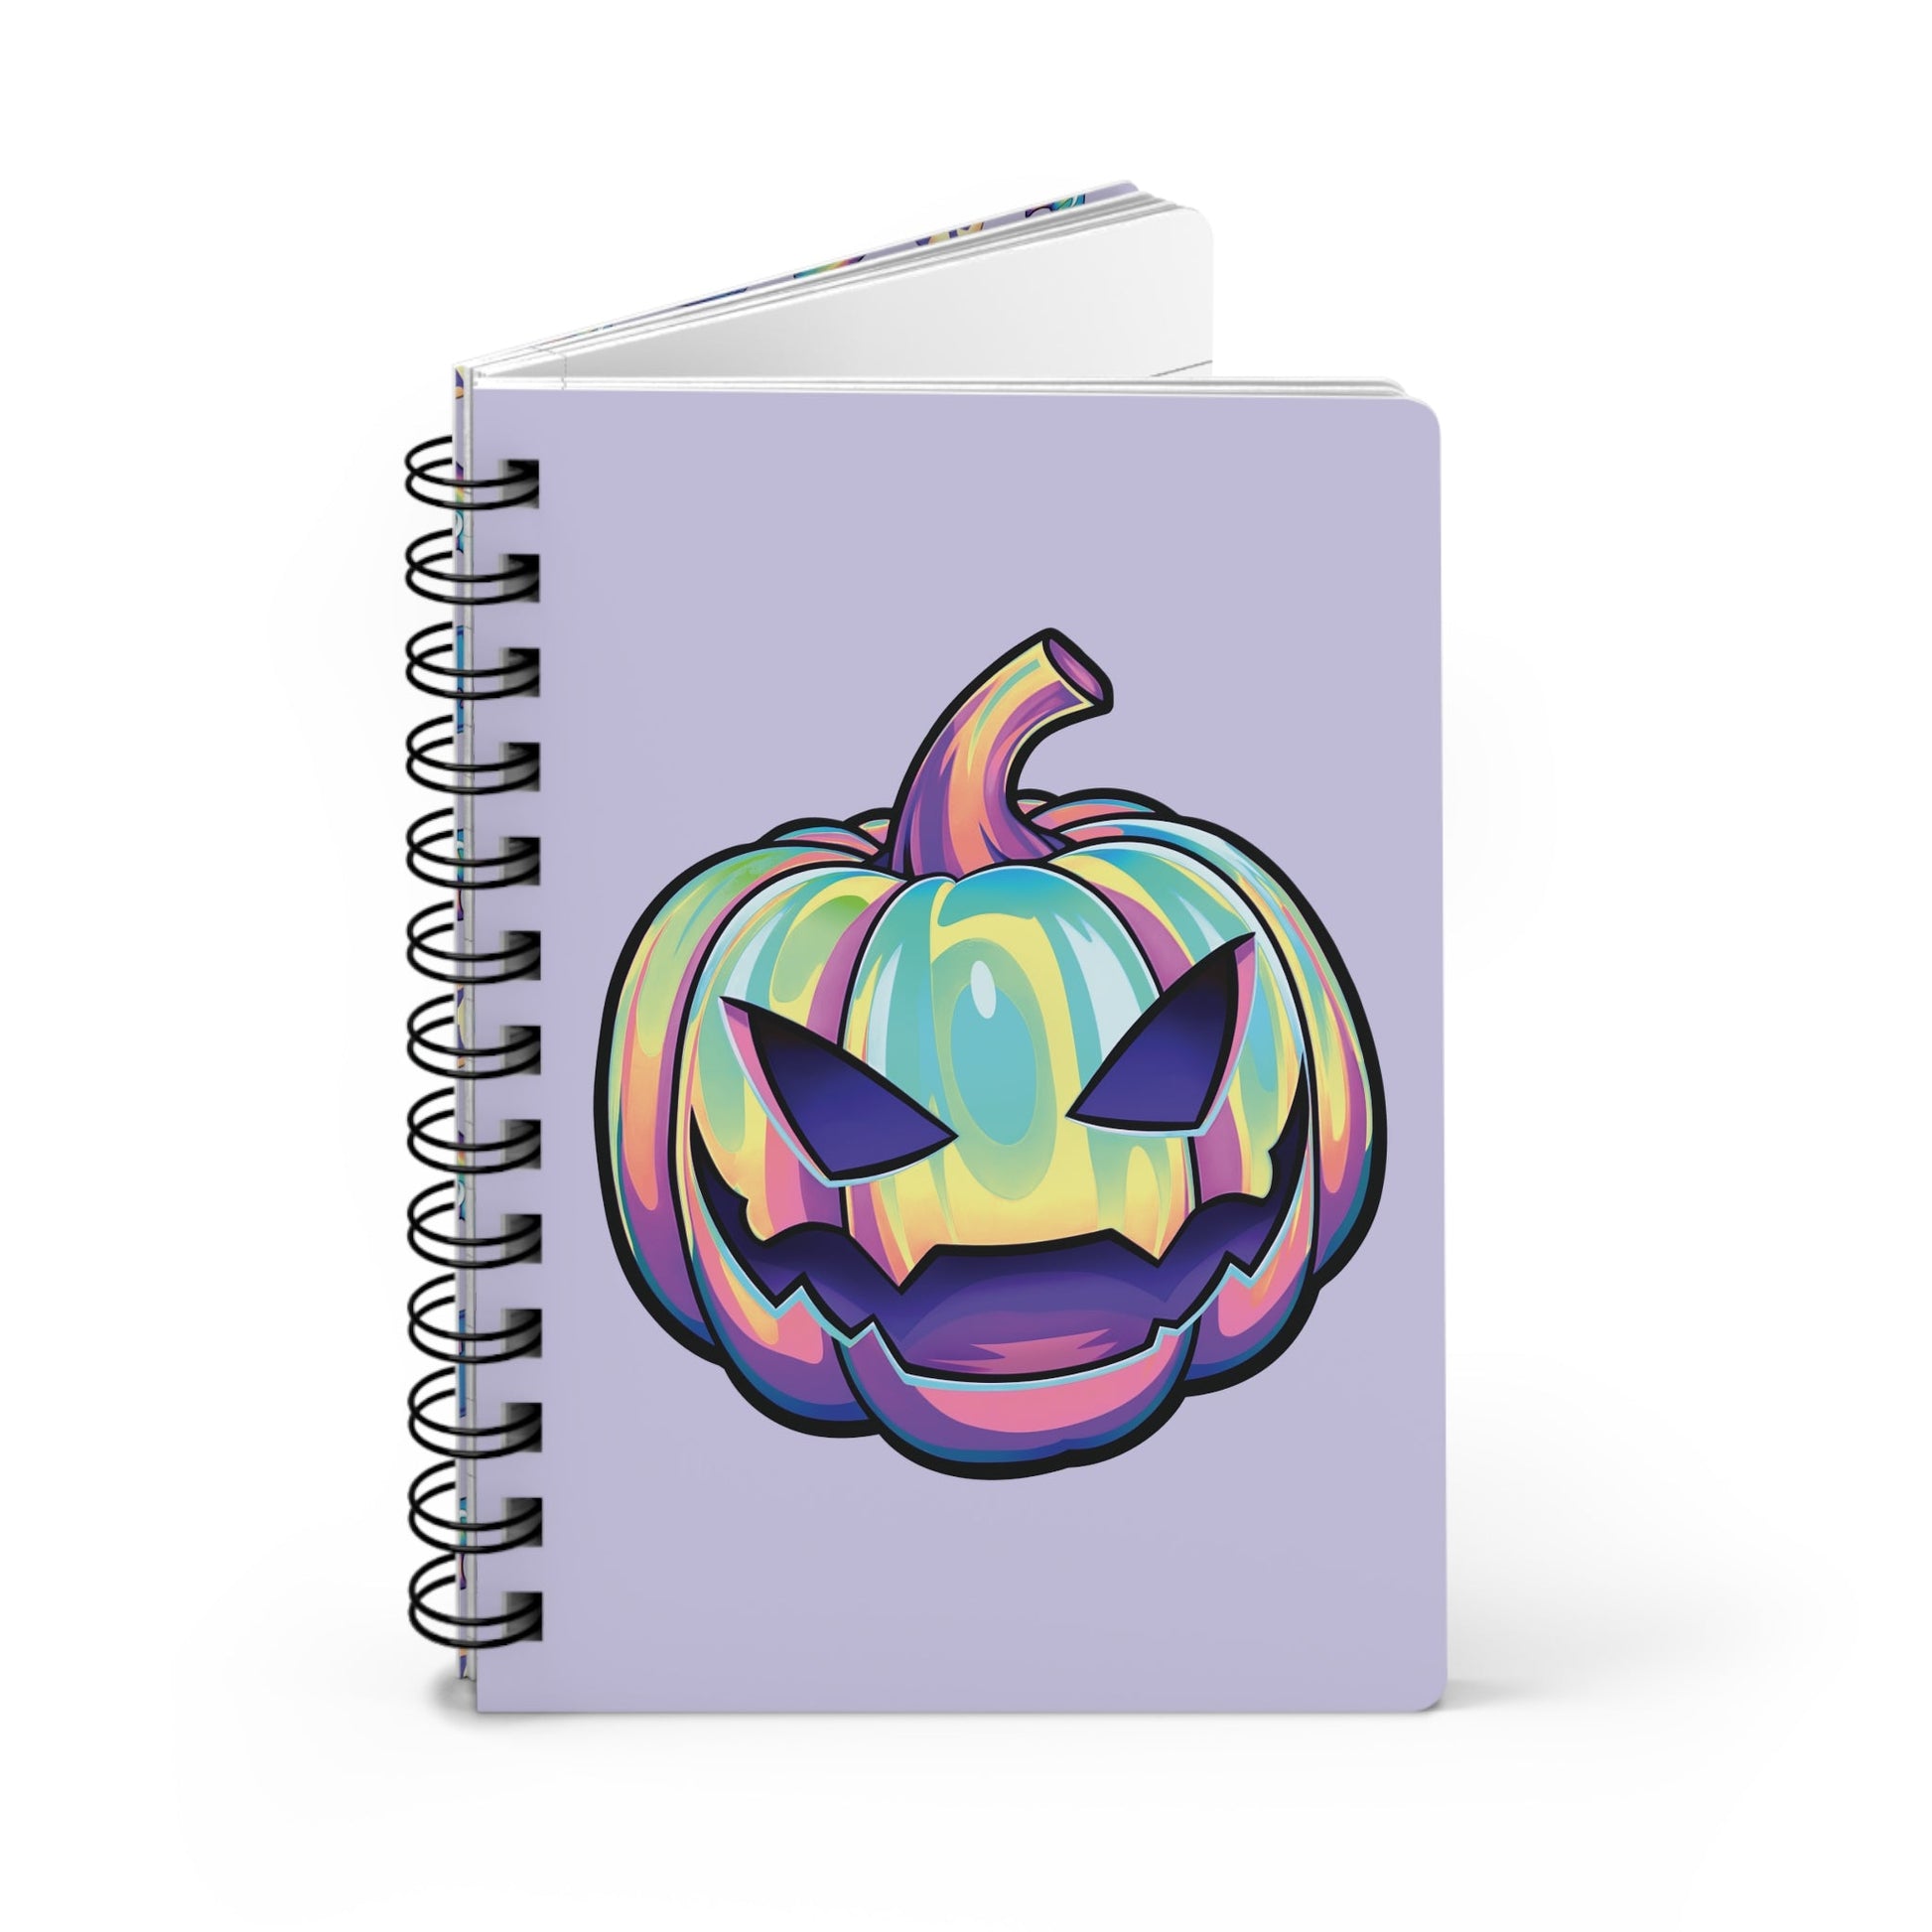 Joke-o'-Lantern Spiral Bound Journal - Violet - Driftless Enchantments